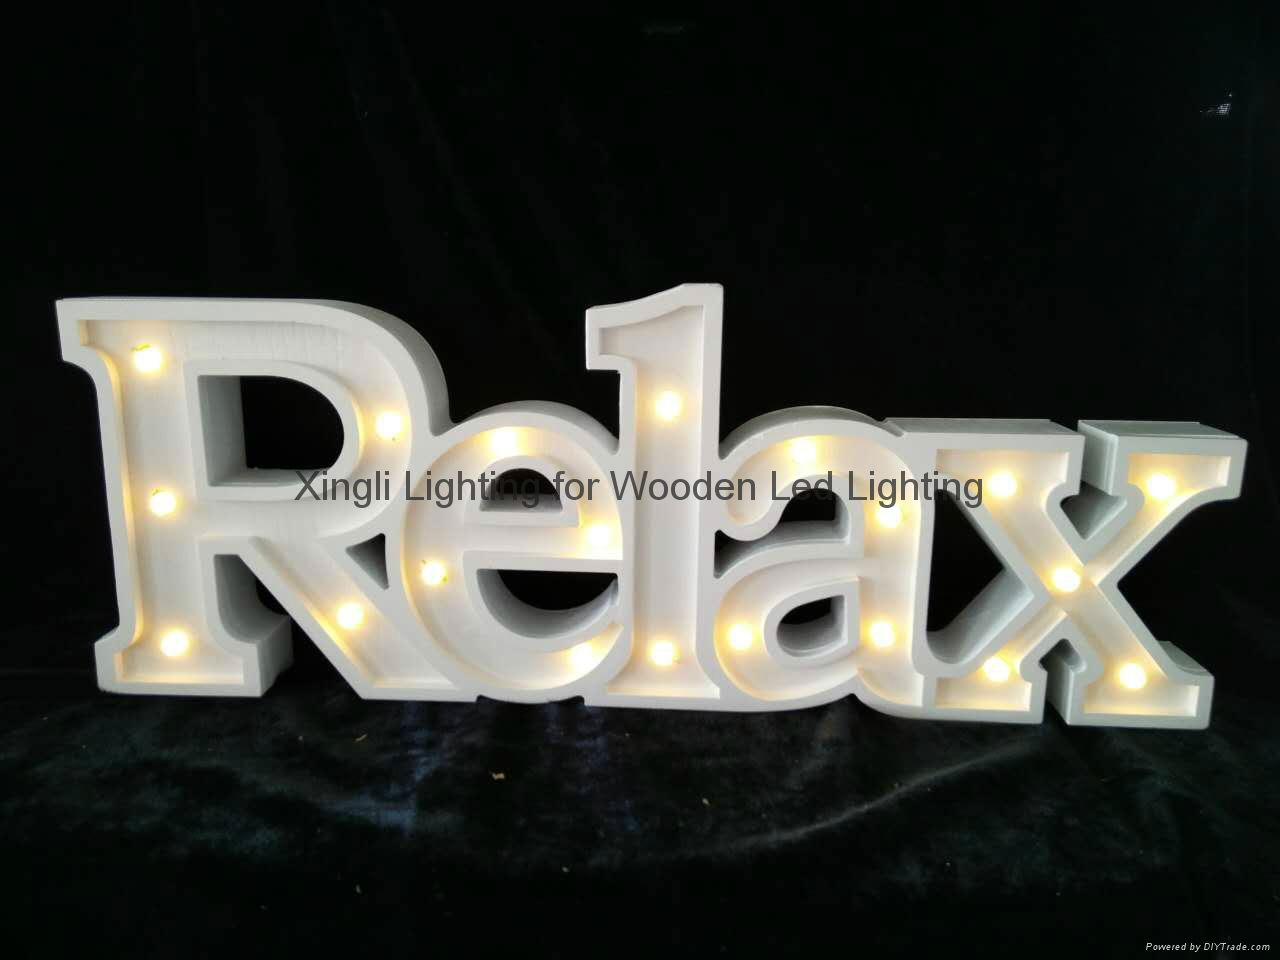 Beautiful letter led lighting wedding decorative wooden night light 2